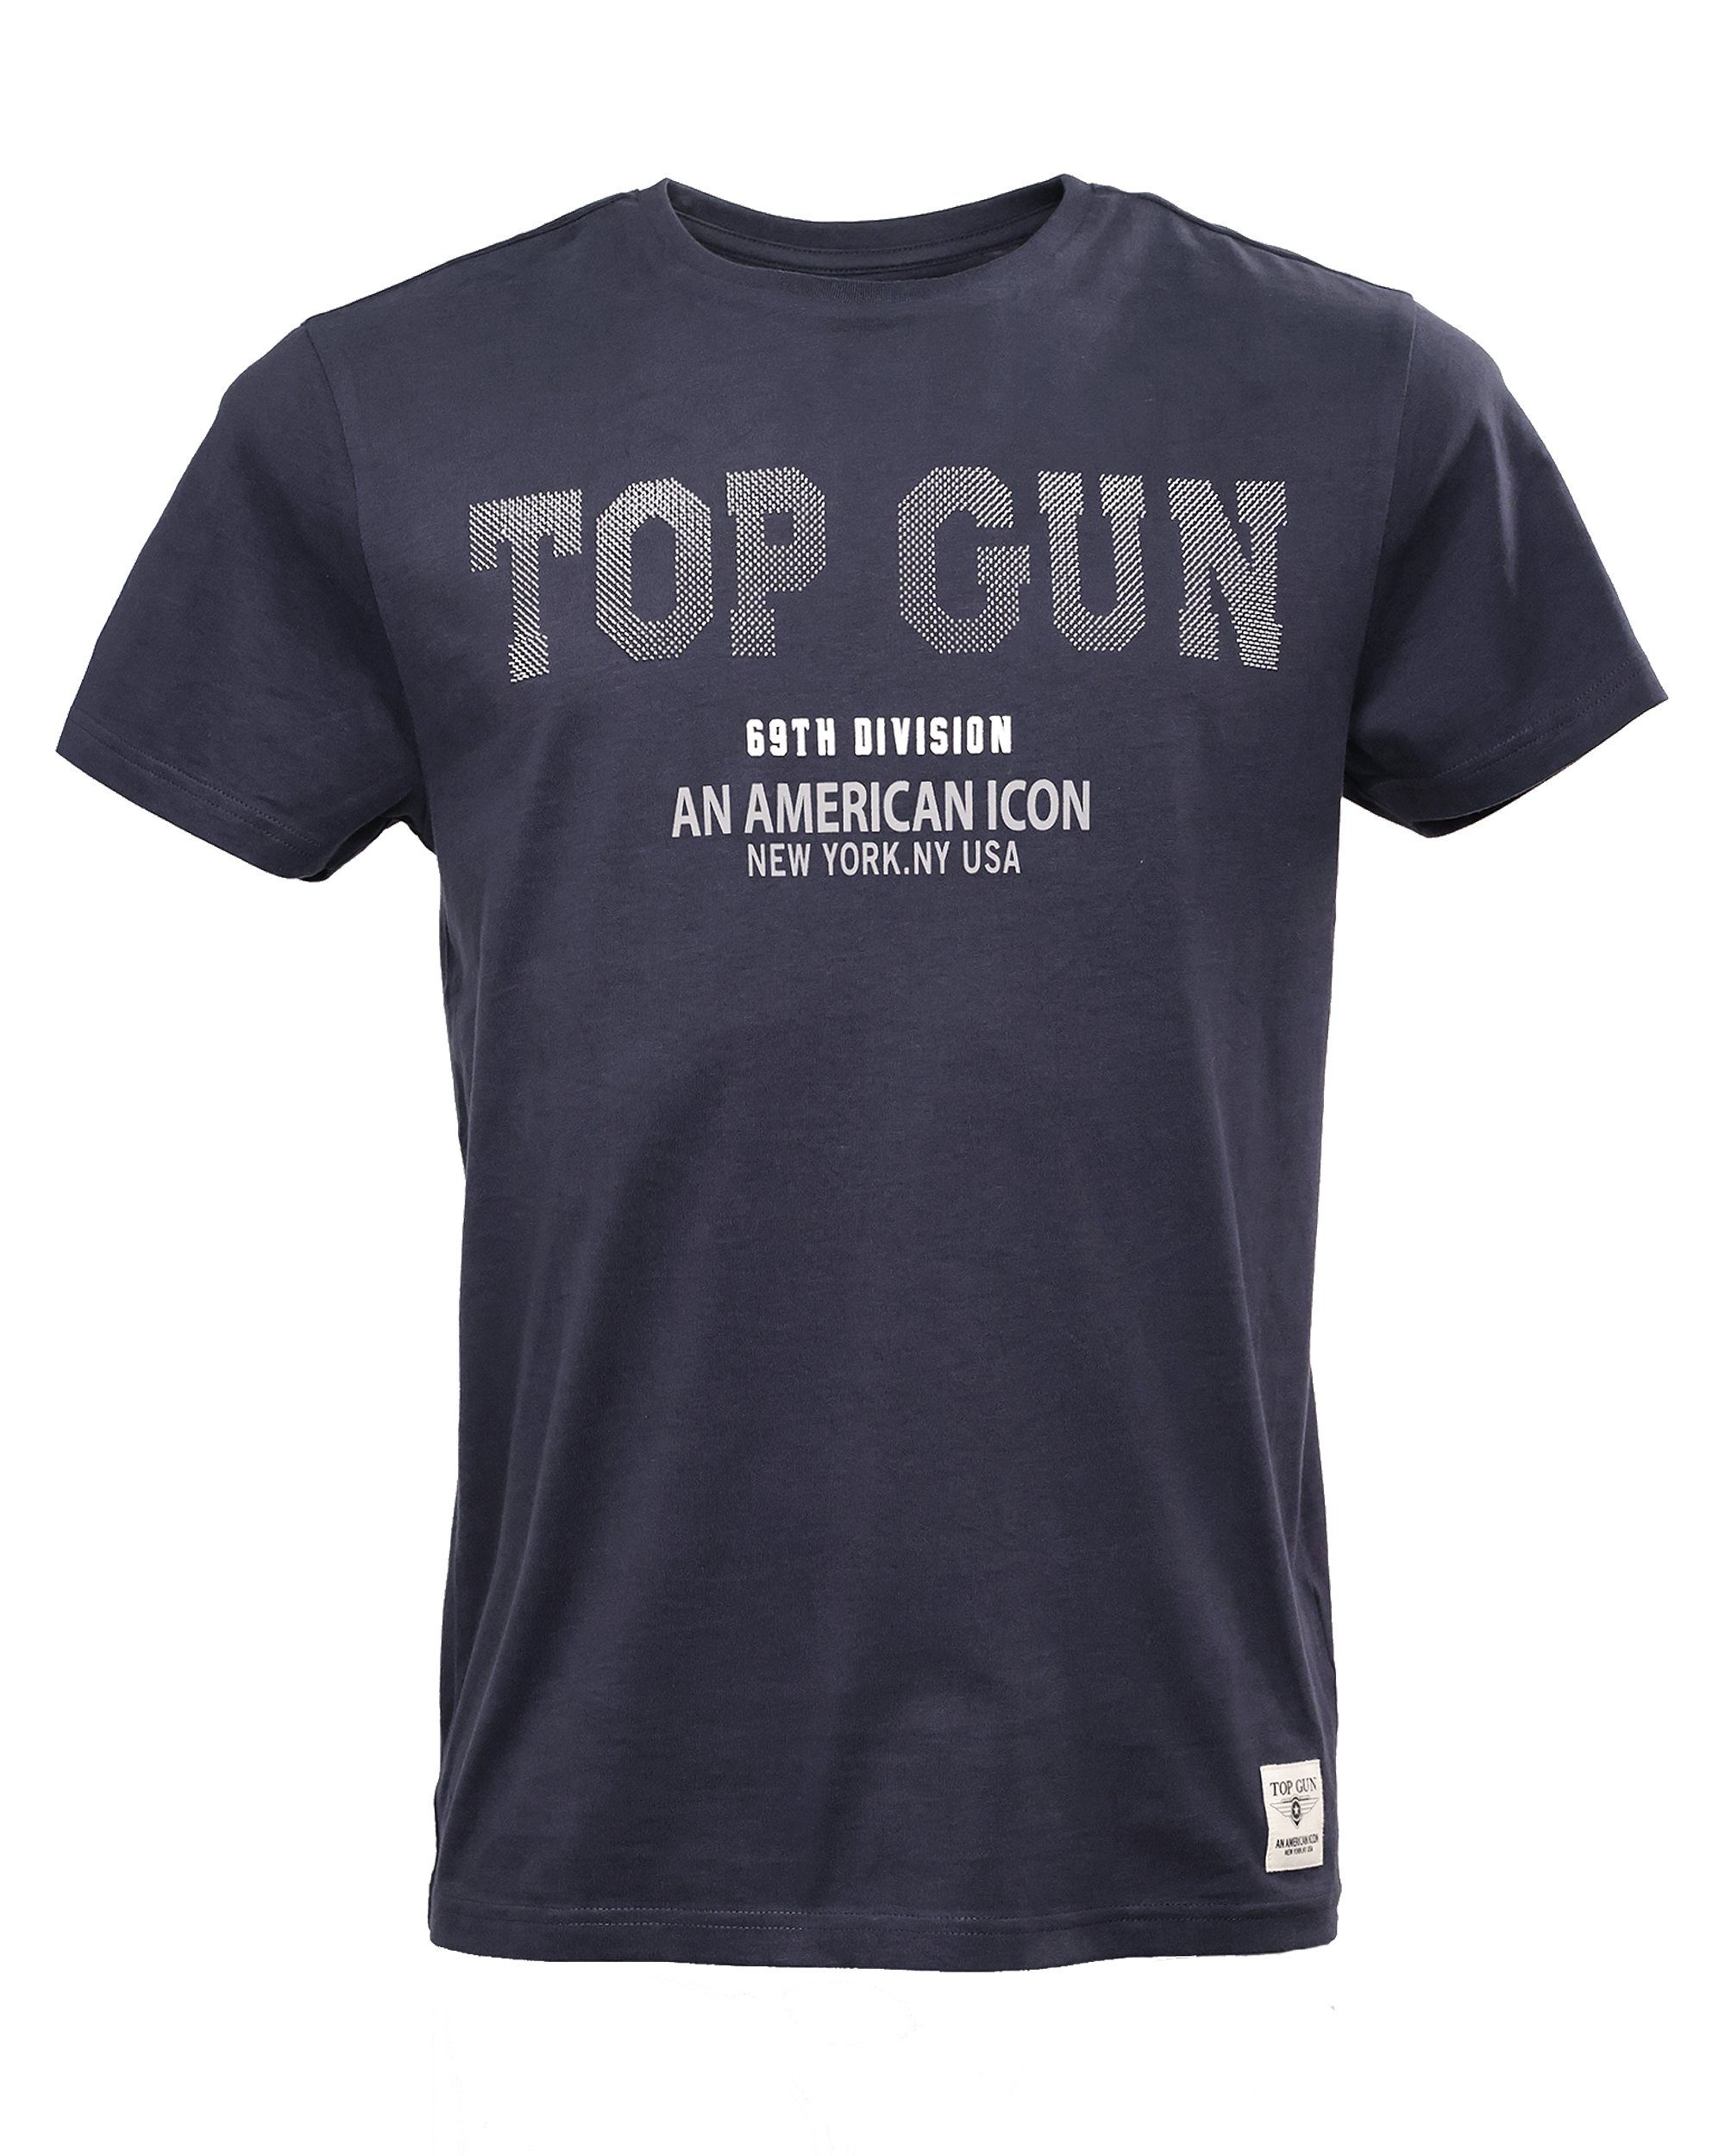 T-Shirt GUN TOP TG20213006 navy